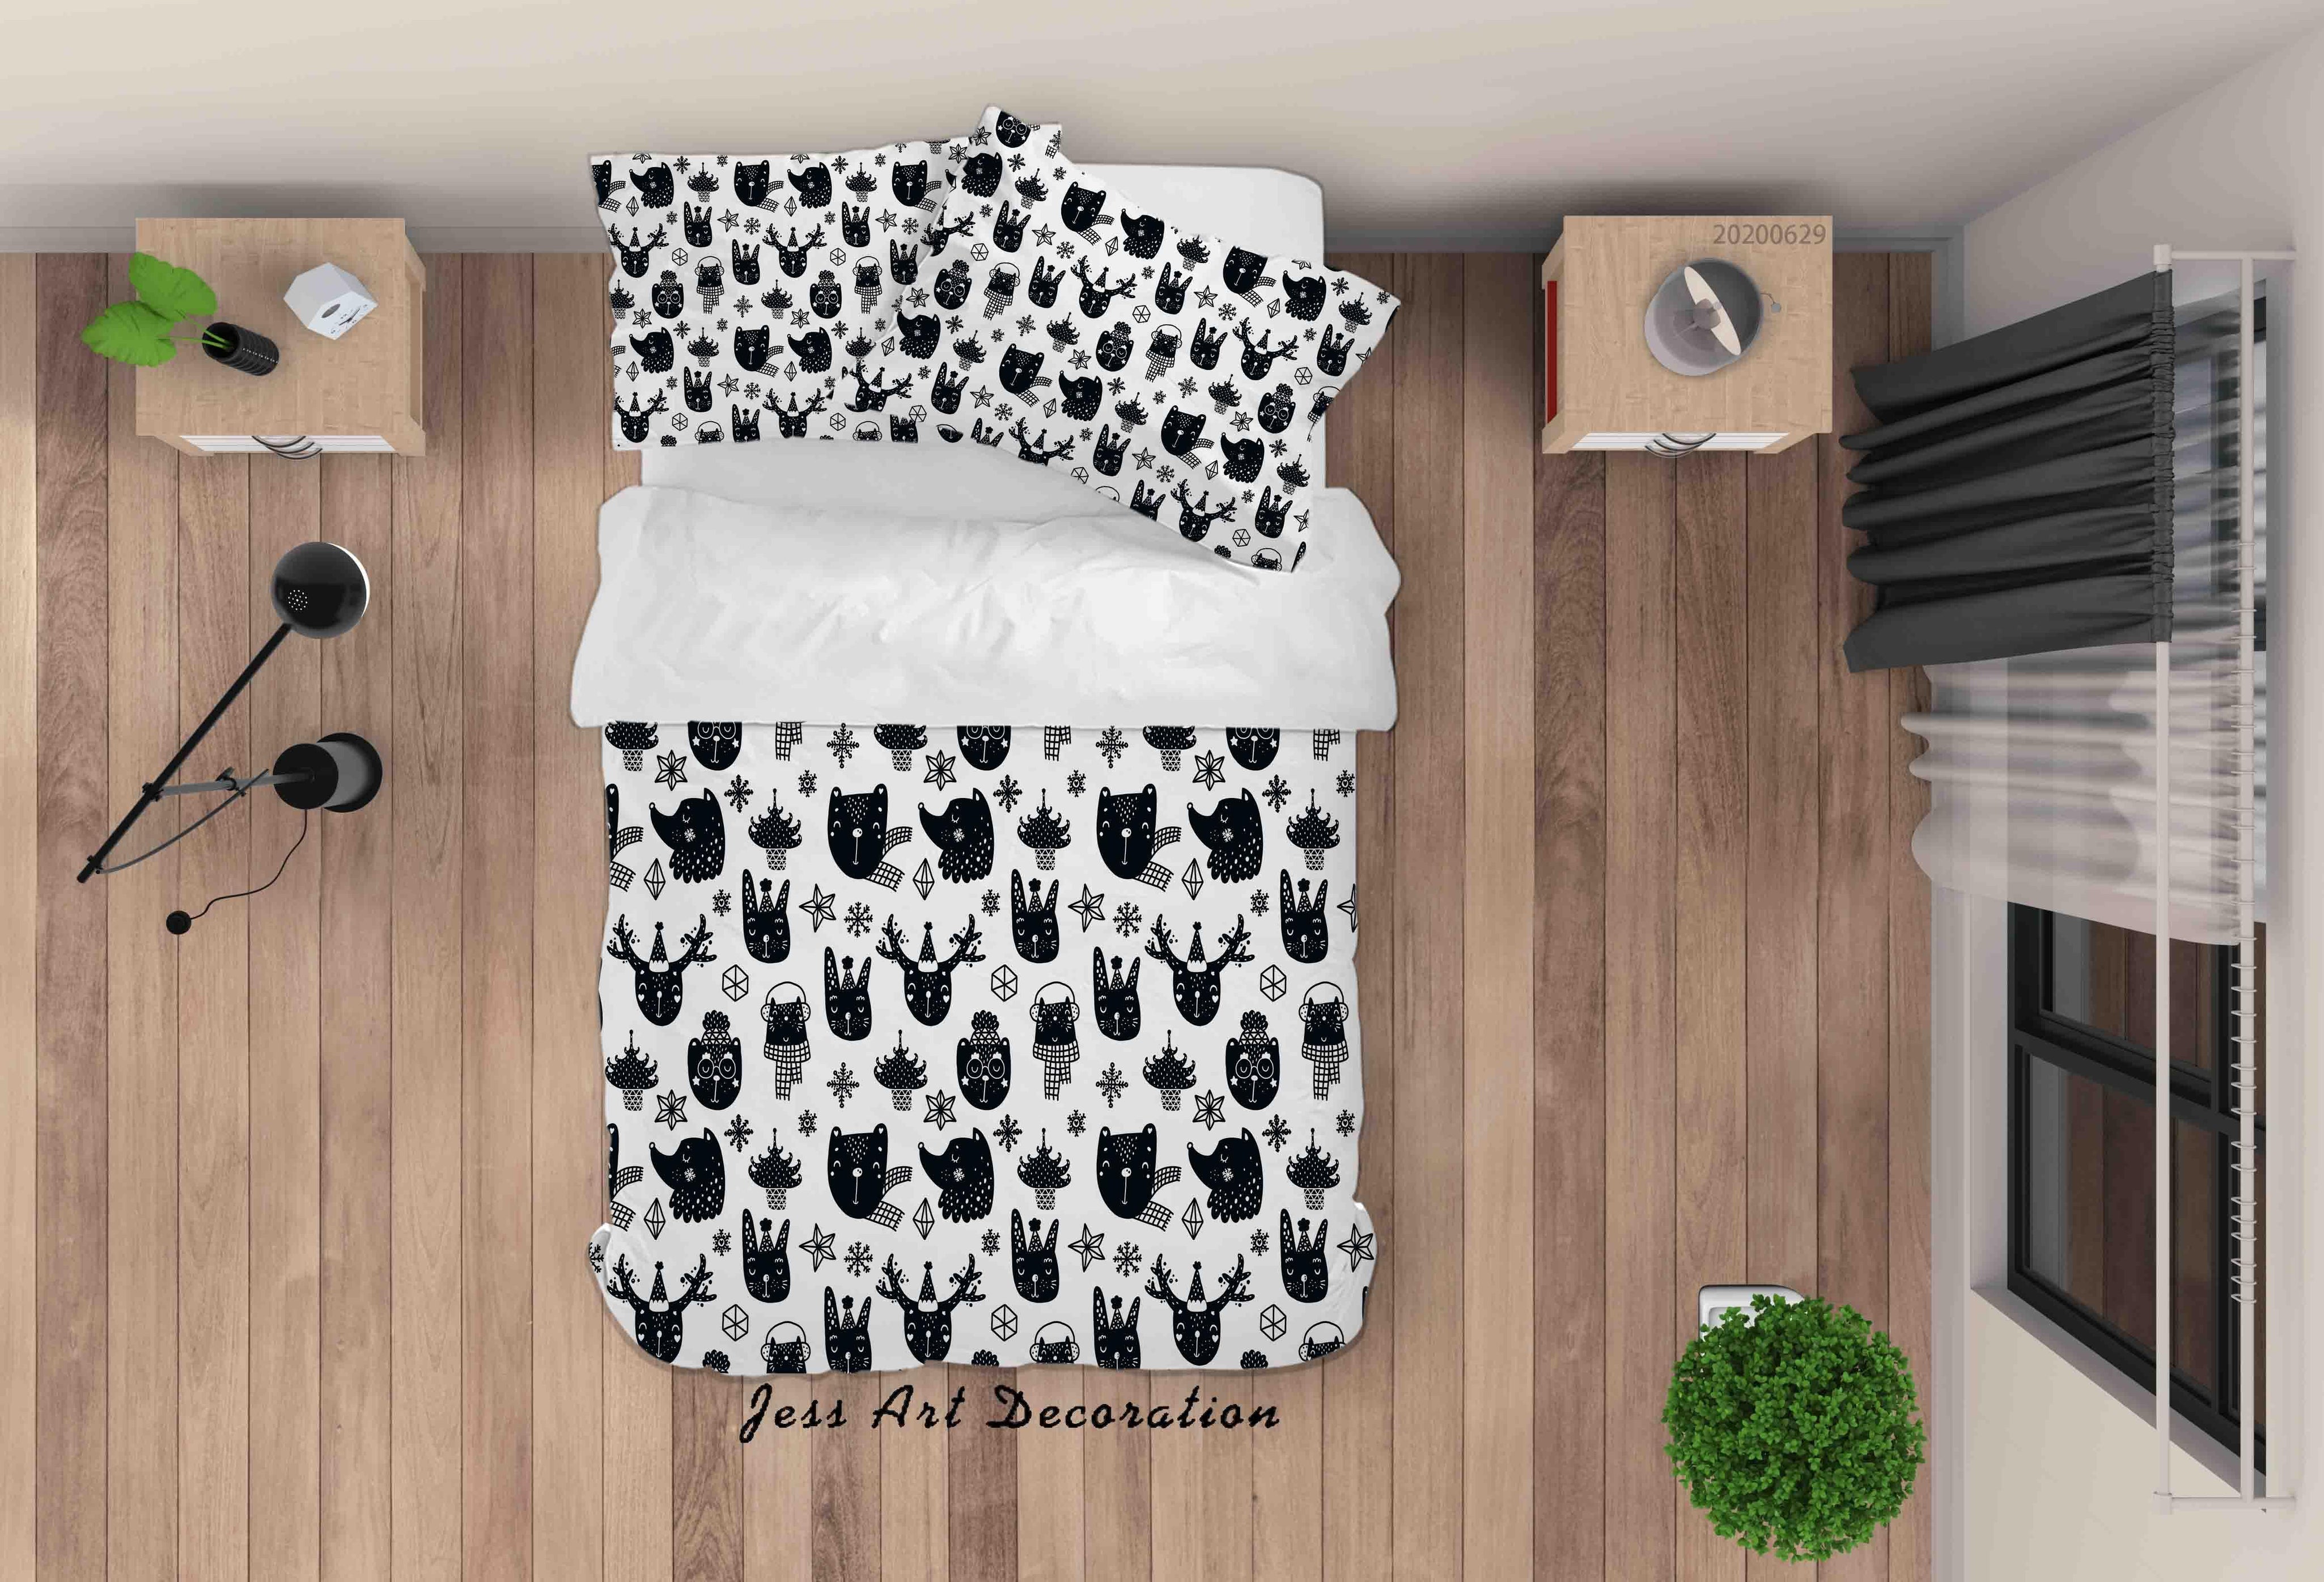 3D White Black Animal Star Snowflake Quilt Cover Set Bedding Set Duvet Cover Pillowcases SF82- Jess Art Decoration